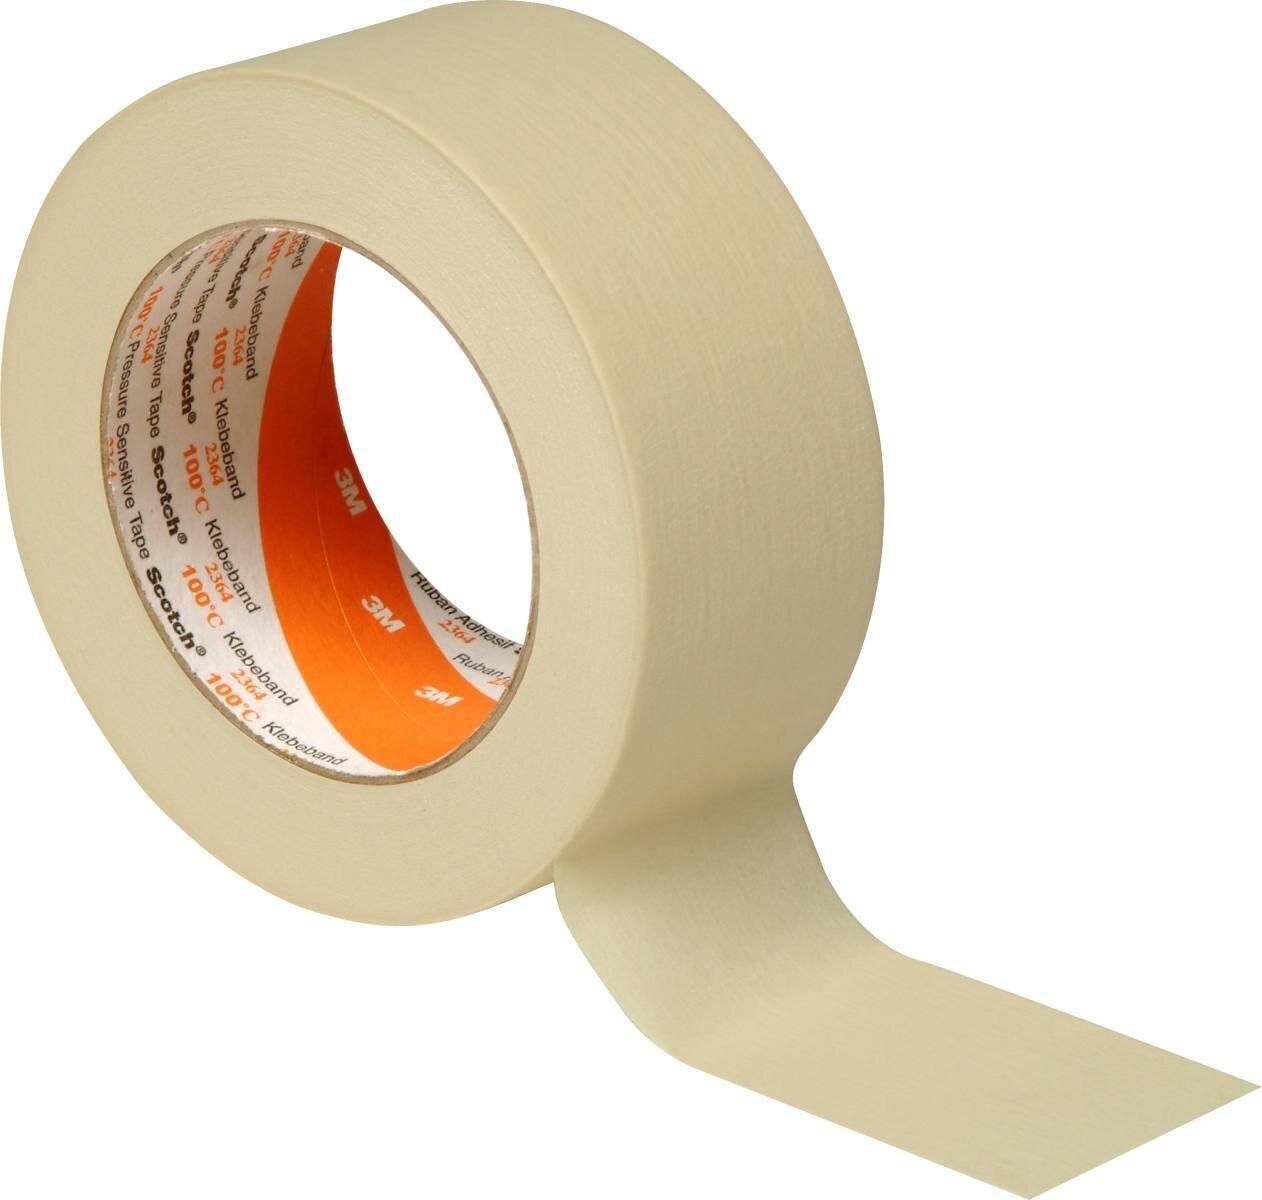 3M Scotch papieren tape 2364, Zeem, 36 mm x 50 m, 0,16 mm